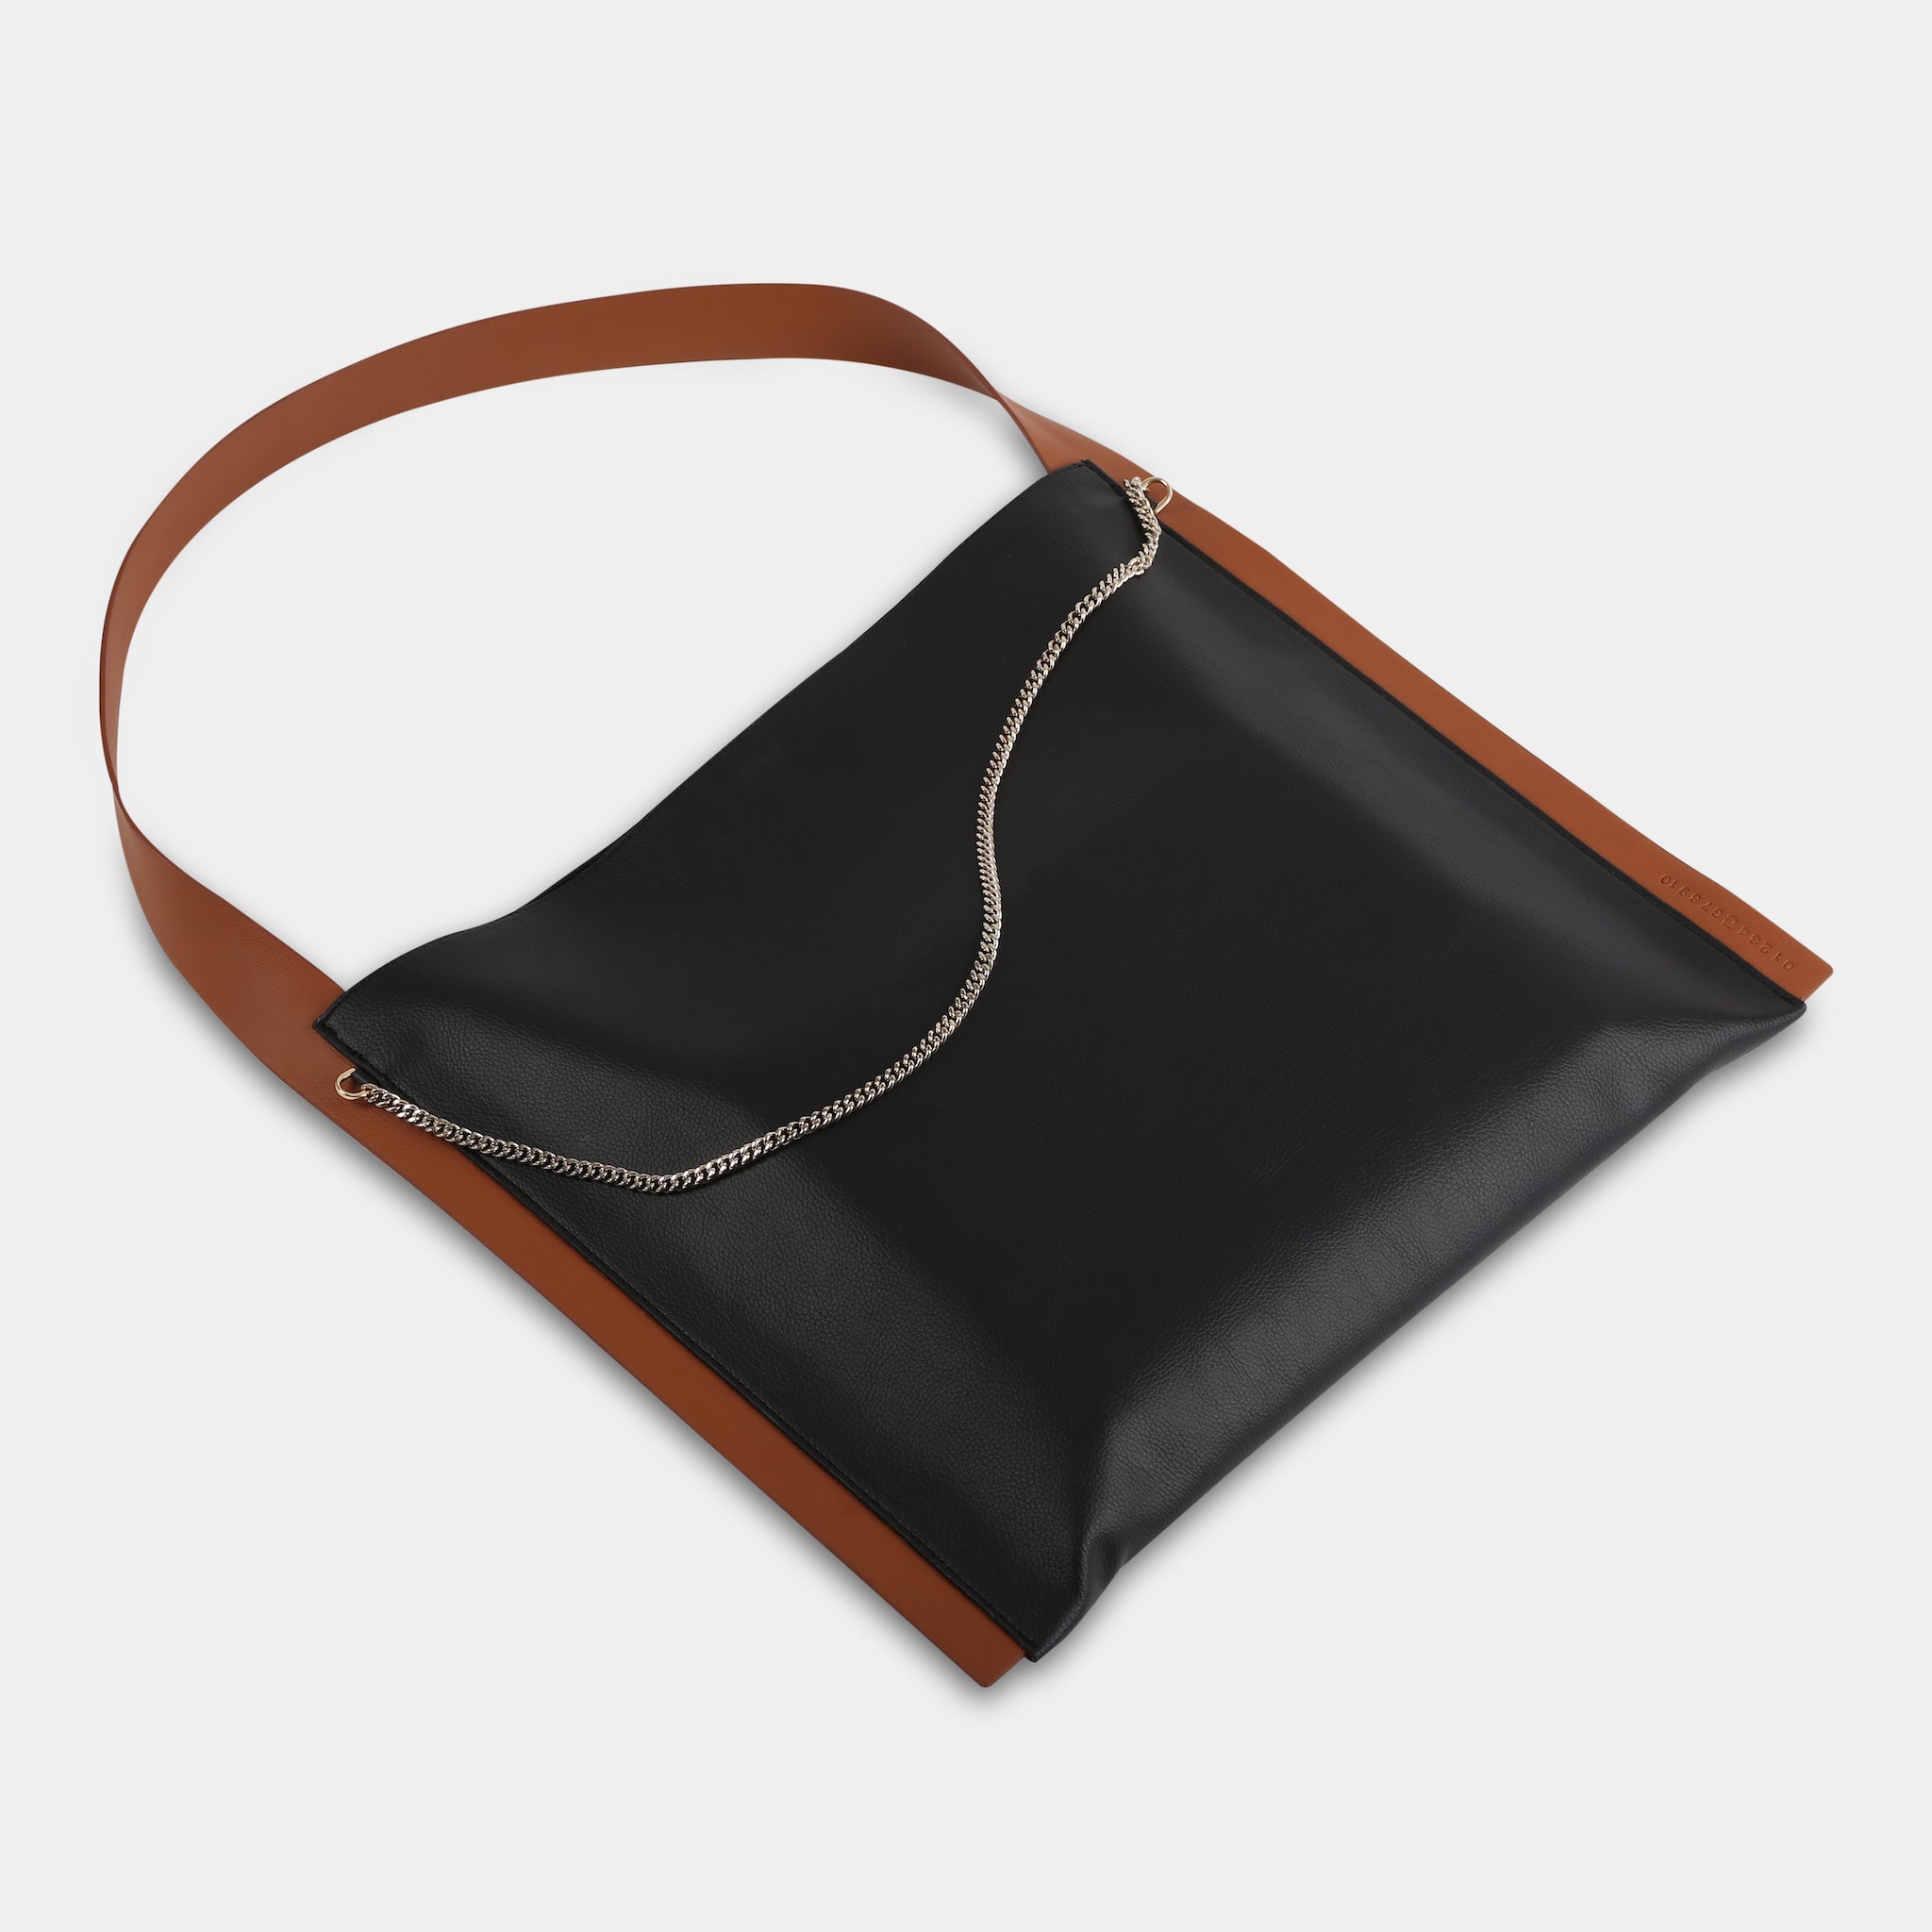 PAPER TOTE handbag in black with green strap